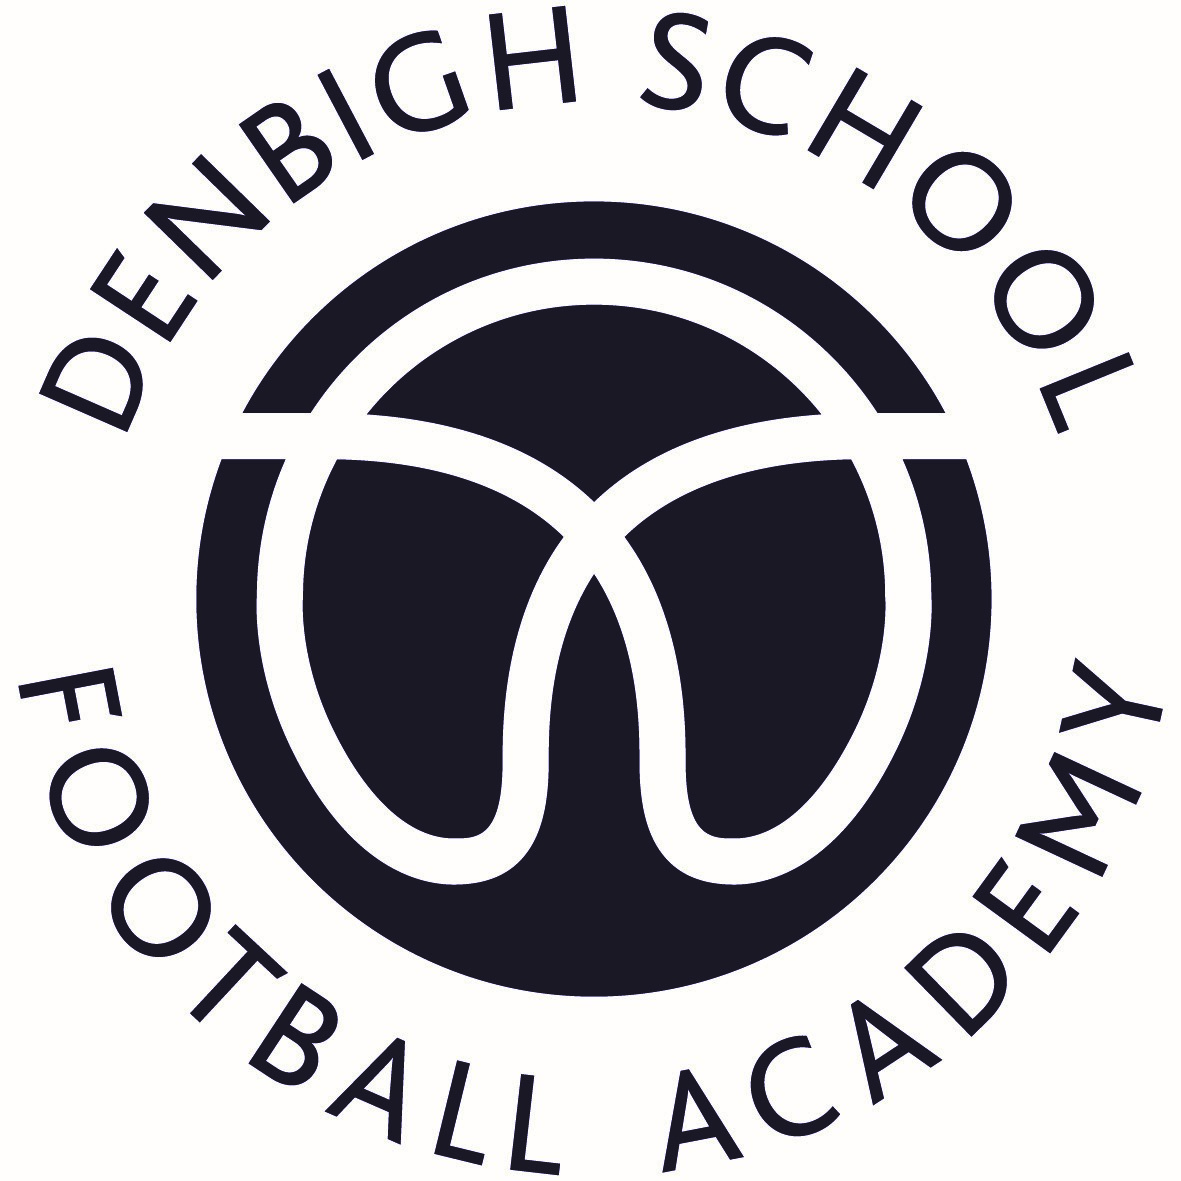 Denbigh School Football Academy  badge